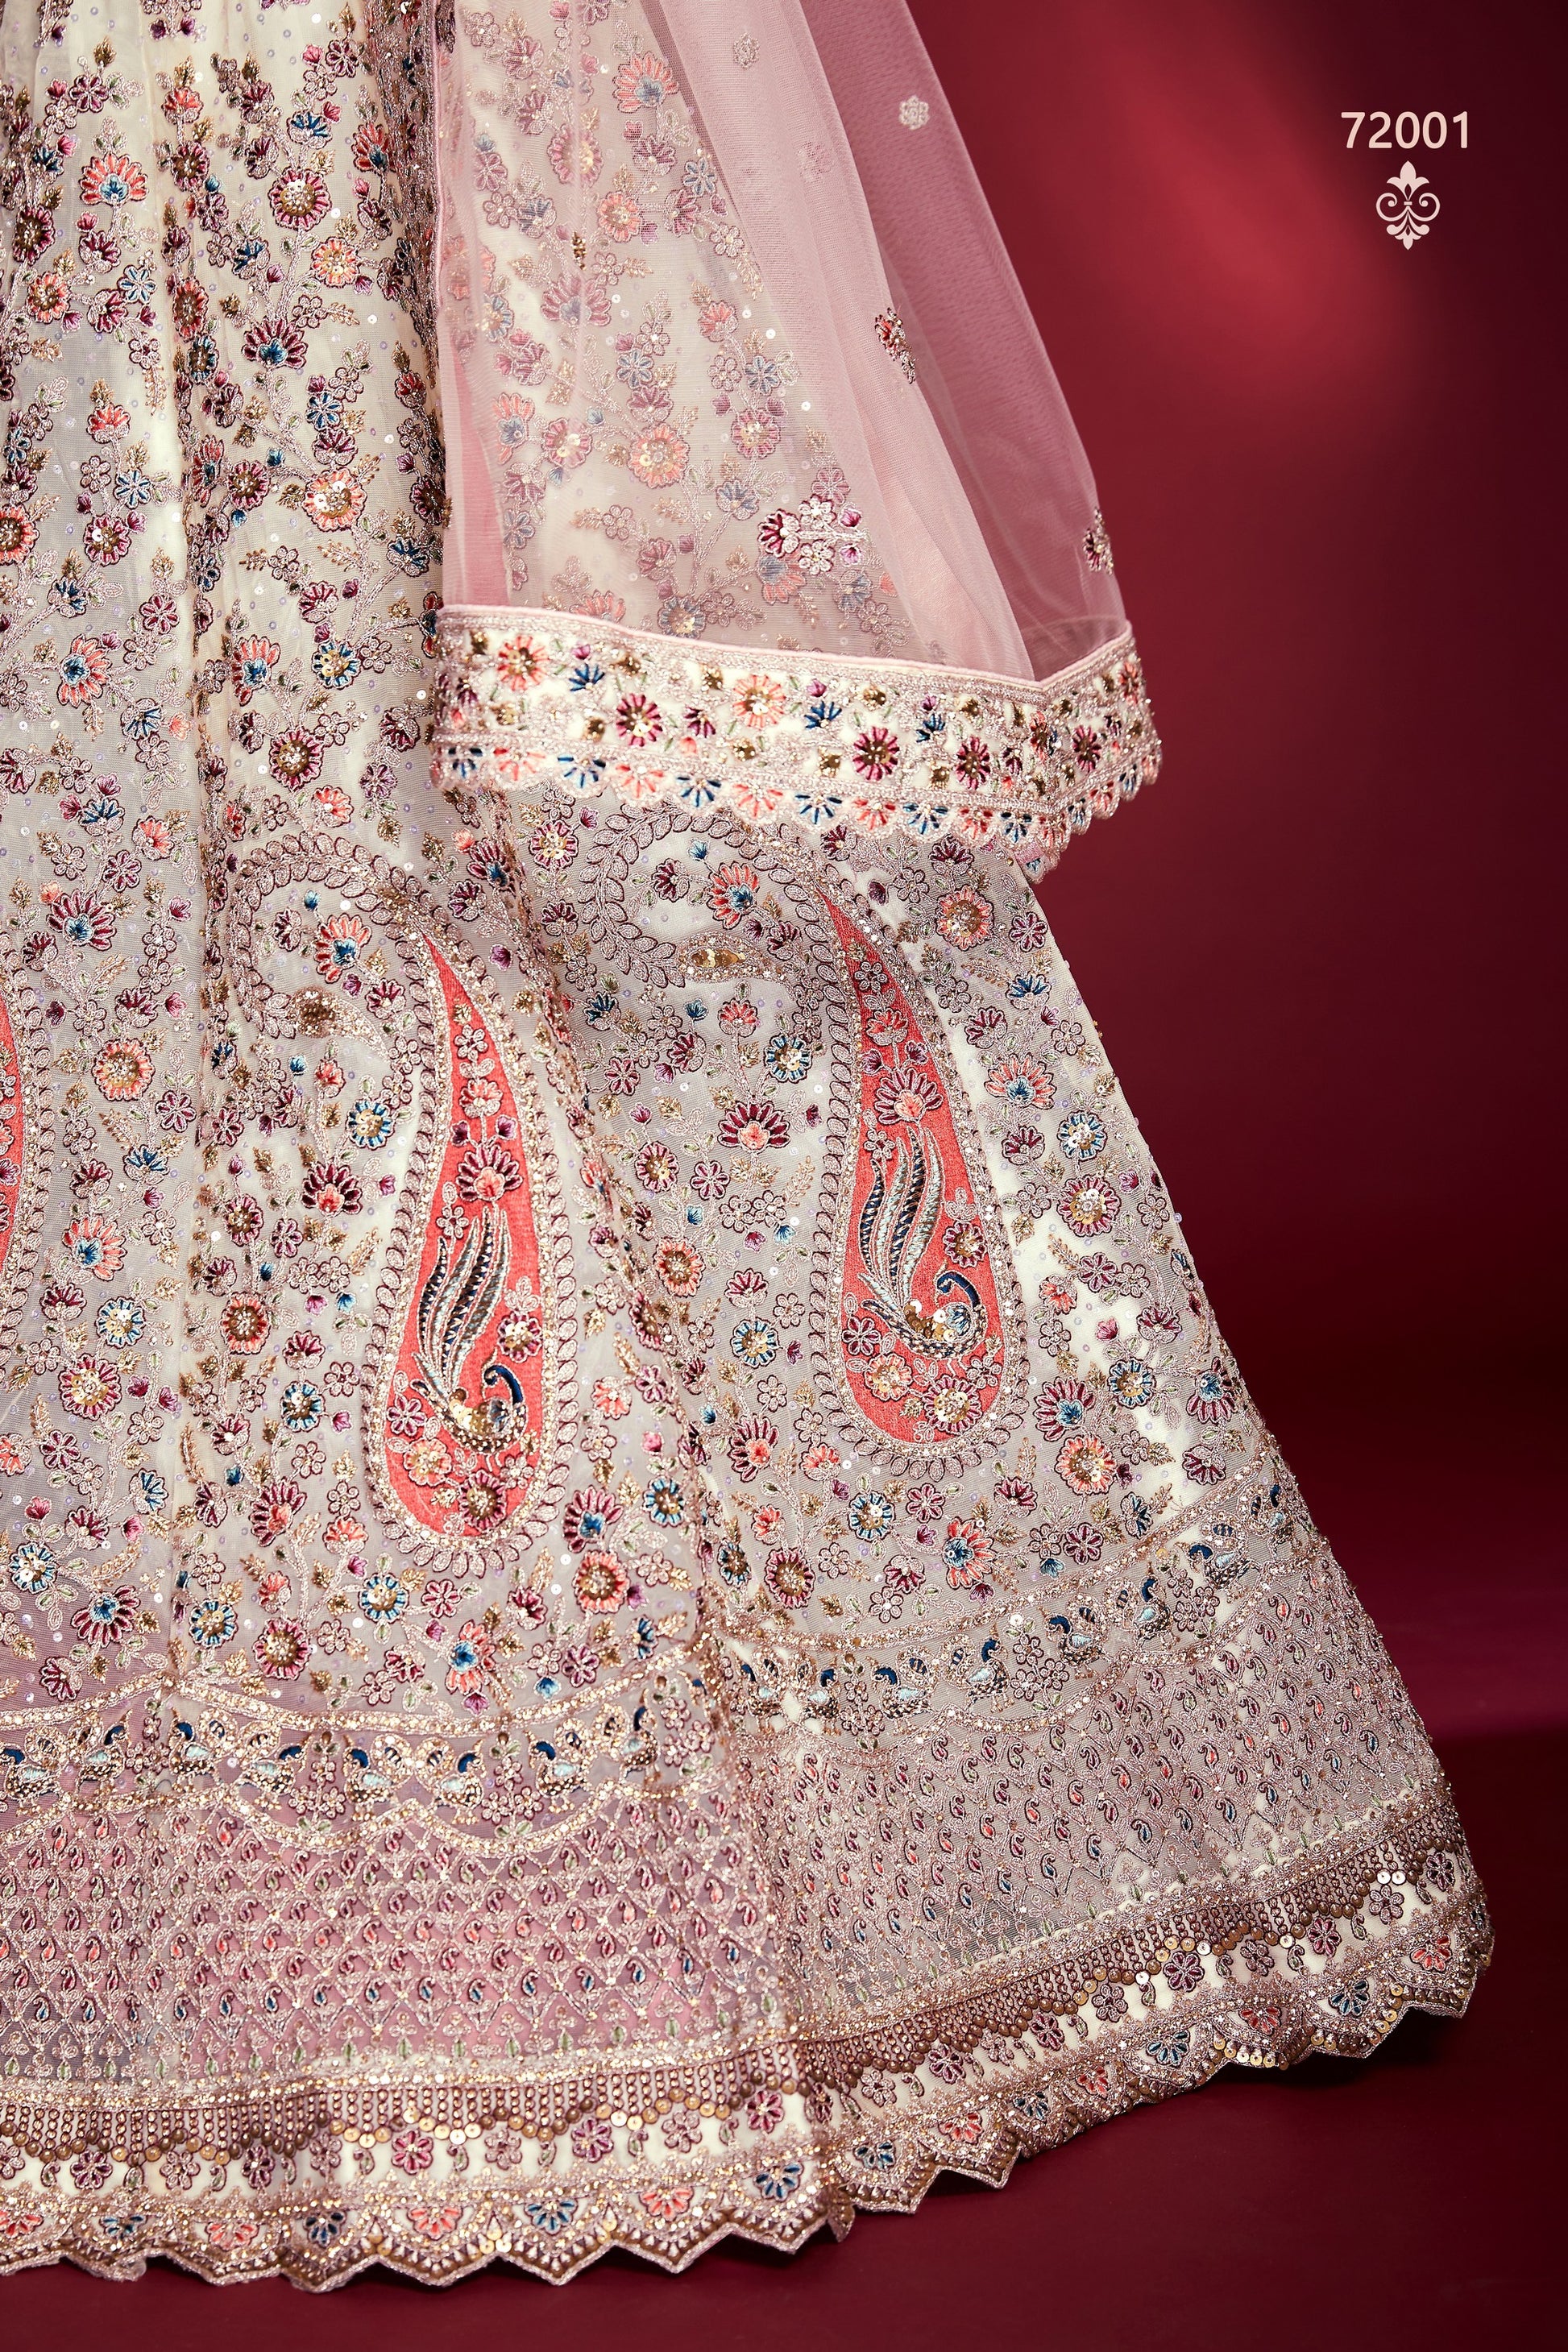 White Pakistani Silk Lehenga Choli For Indian Festivals & Weddings - Sequence Embroidery Work, Thread Embroidery Work, Dori Work, Zarkan Work